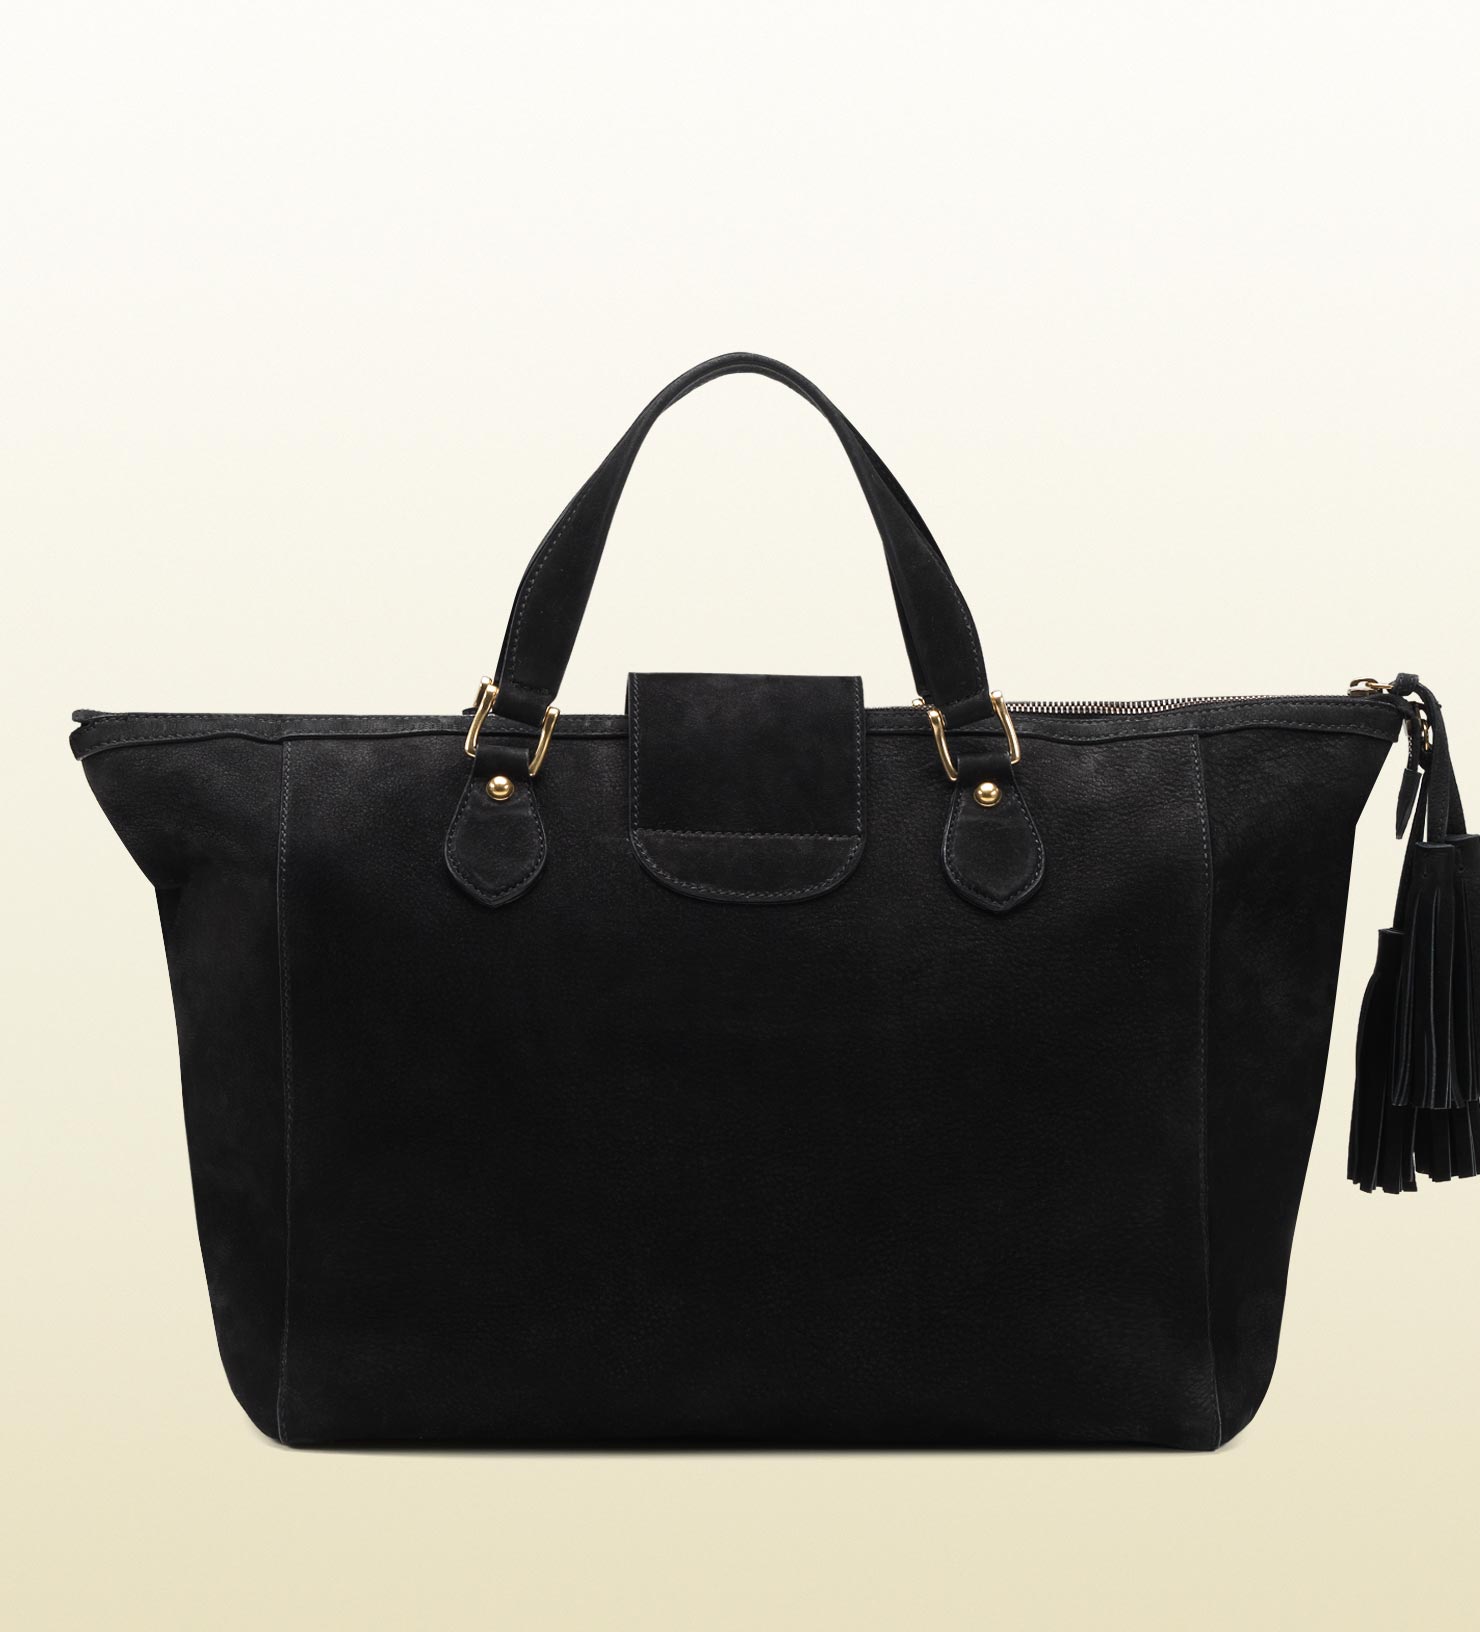 Lyst - Gucci Goldmark Top Handle Suede Boston Bag in Black